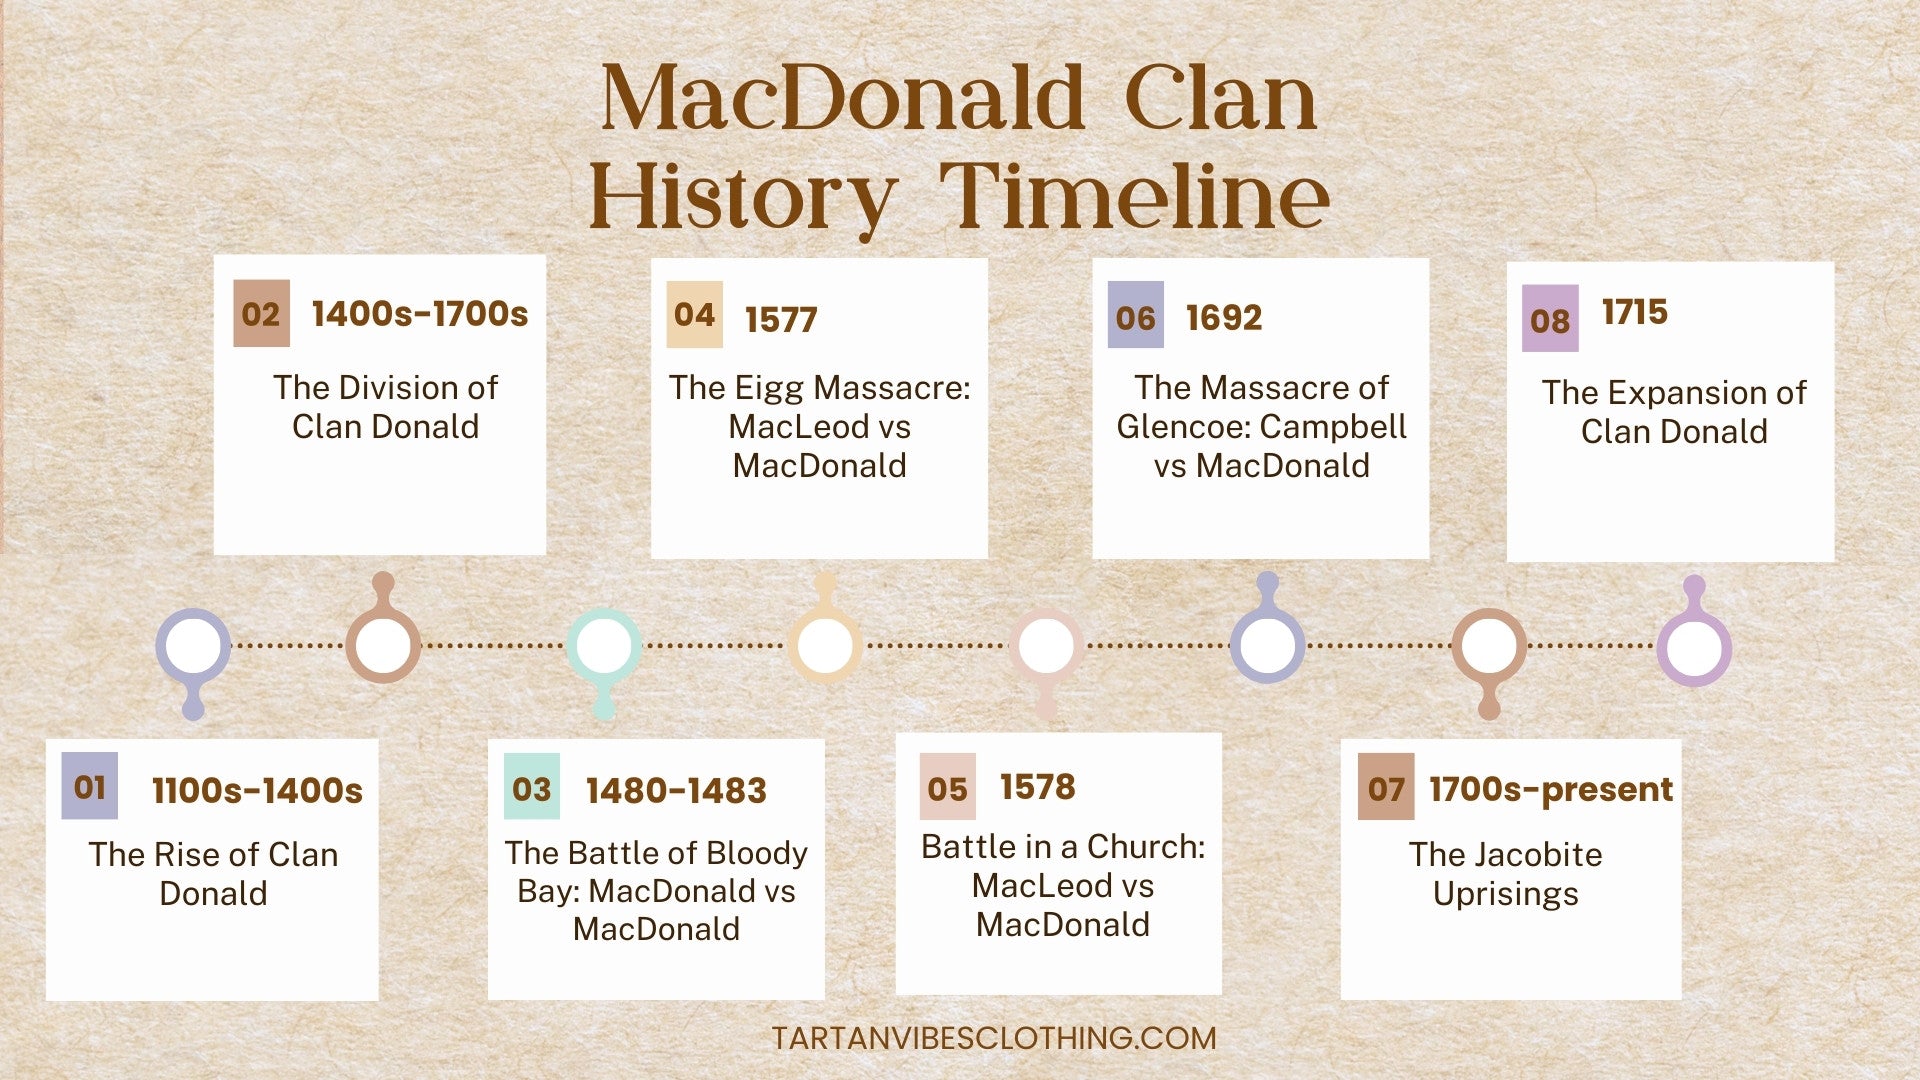 MacDonald Clan History